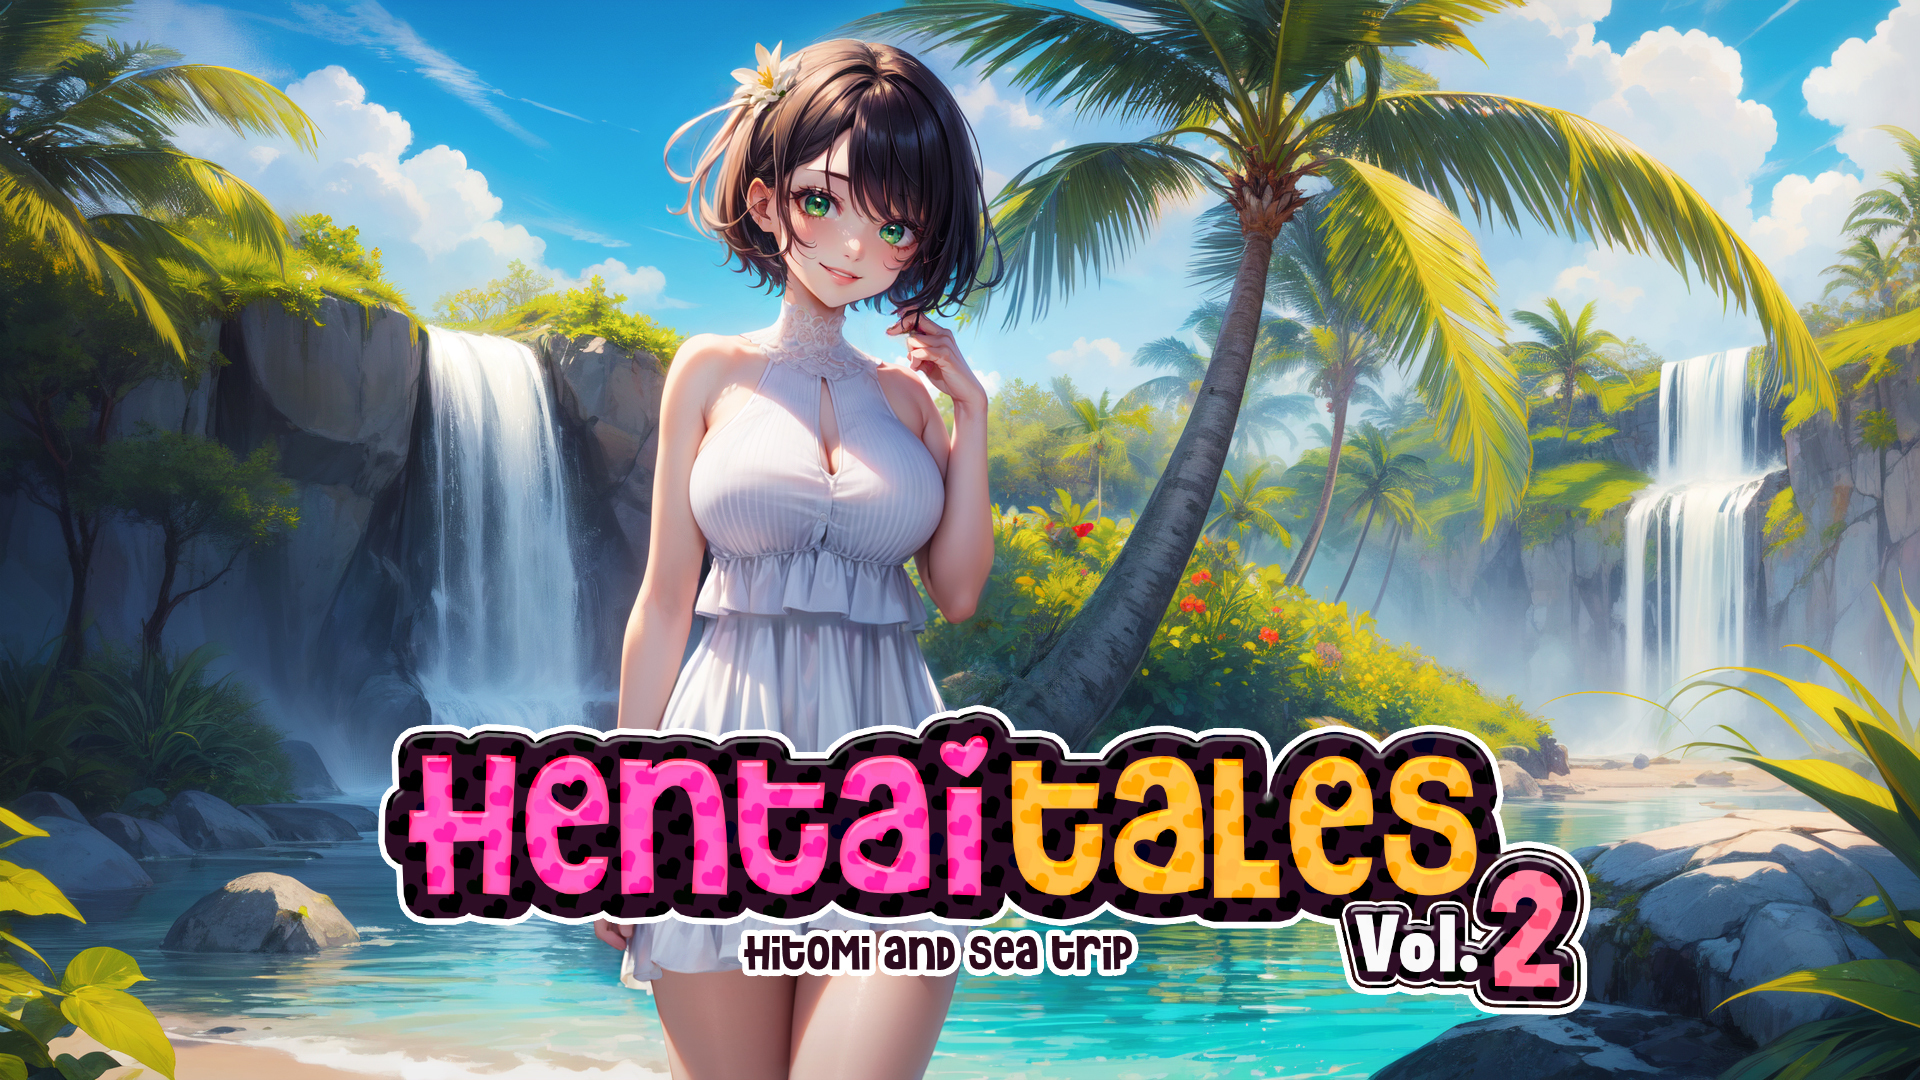 Hentai Tales Vol. 2: Hitomi and Sea Trip - Metacritic